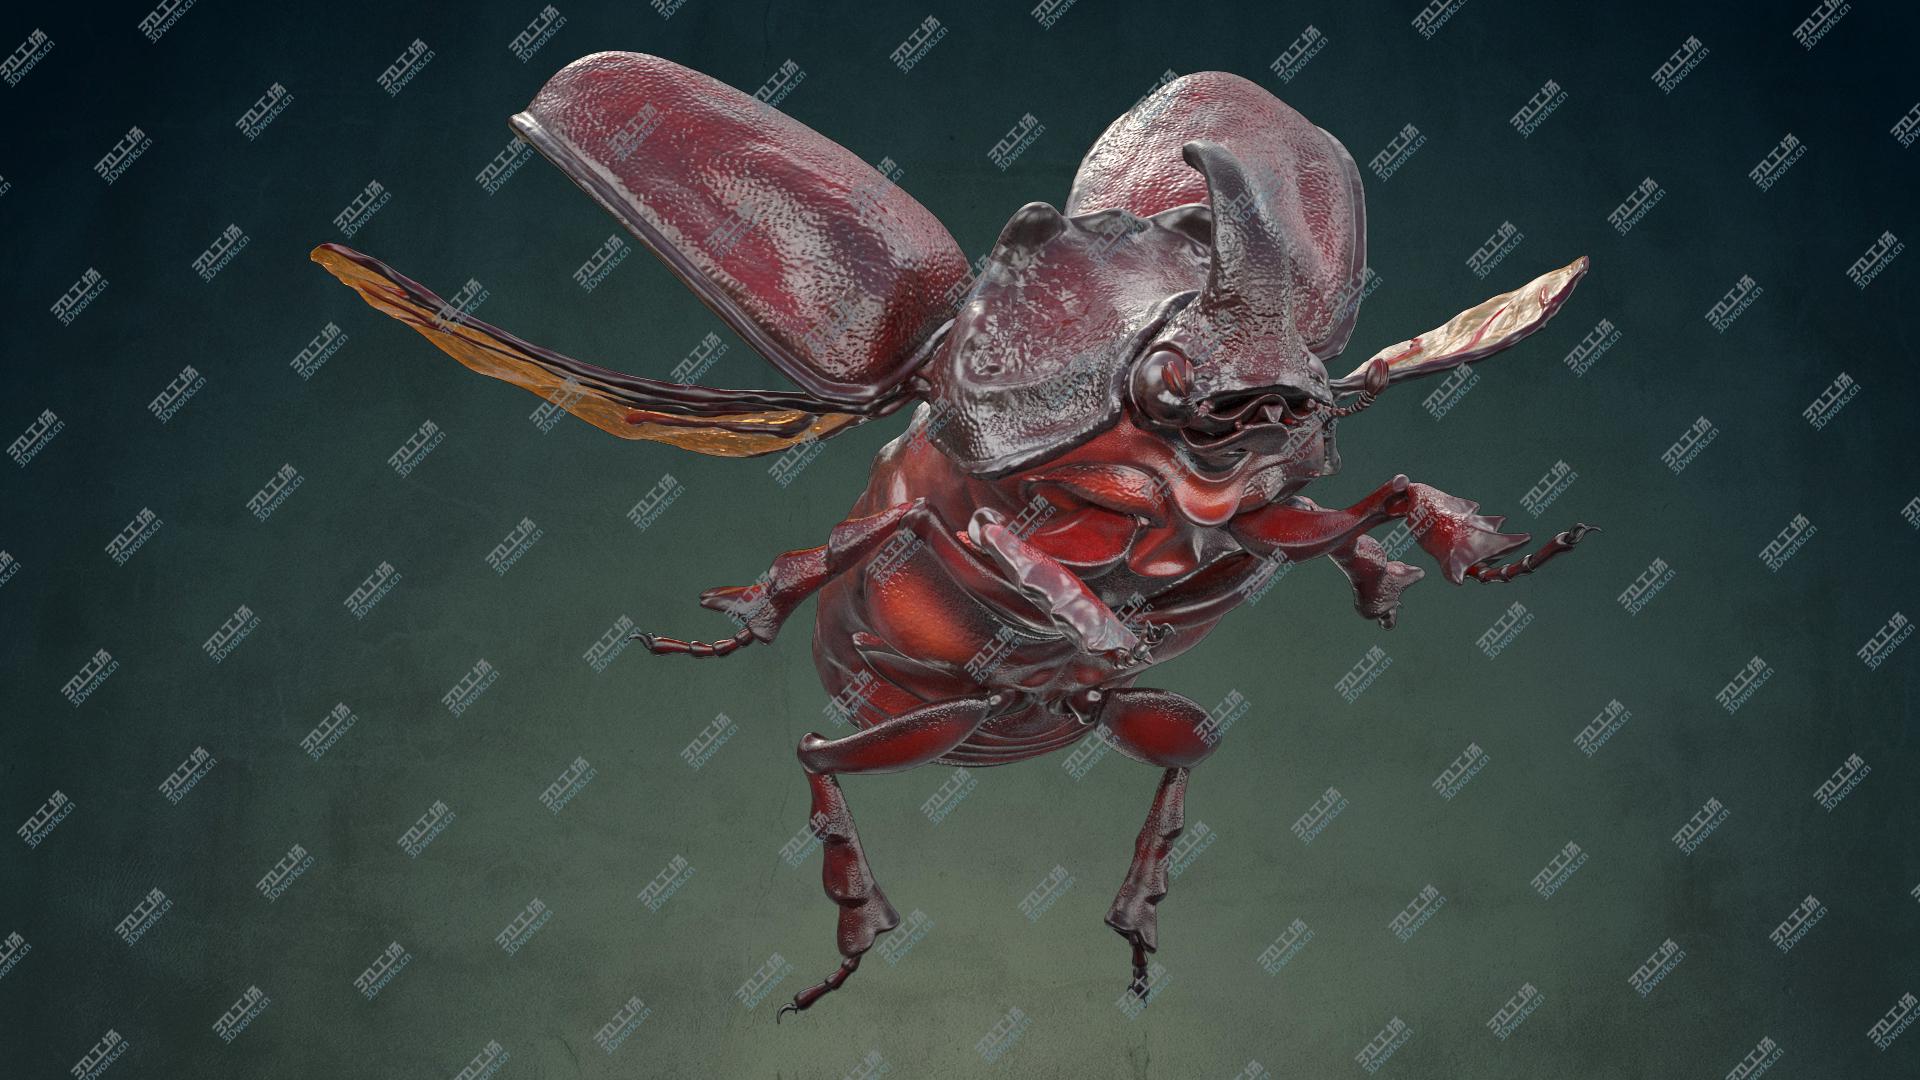 images/goods_img/202104093/Rhinoceros Beetle Oryctes Nasicornis Flying 3D model/1.jpg